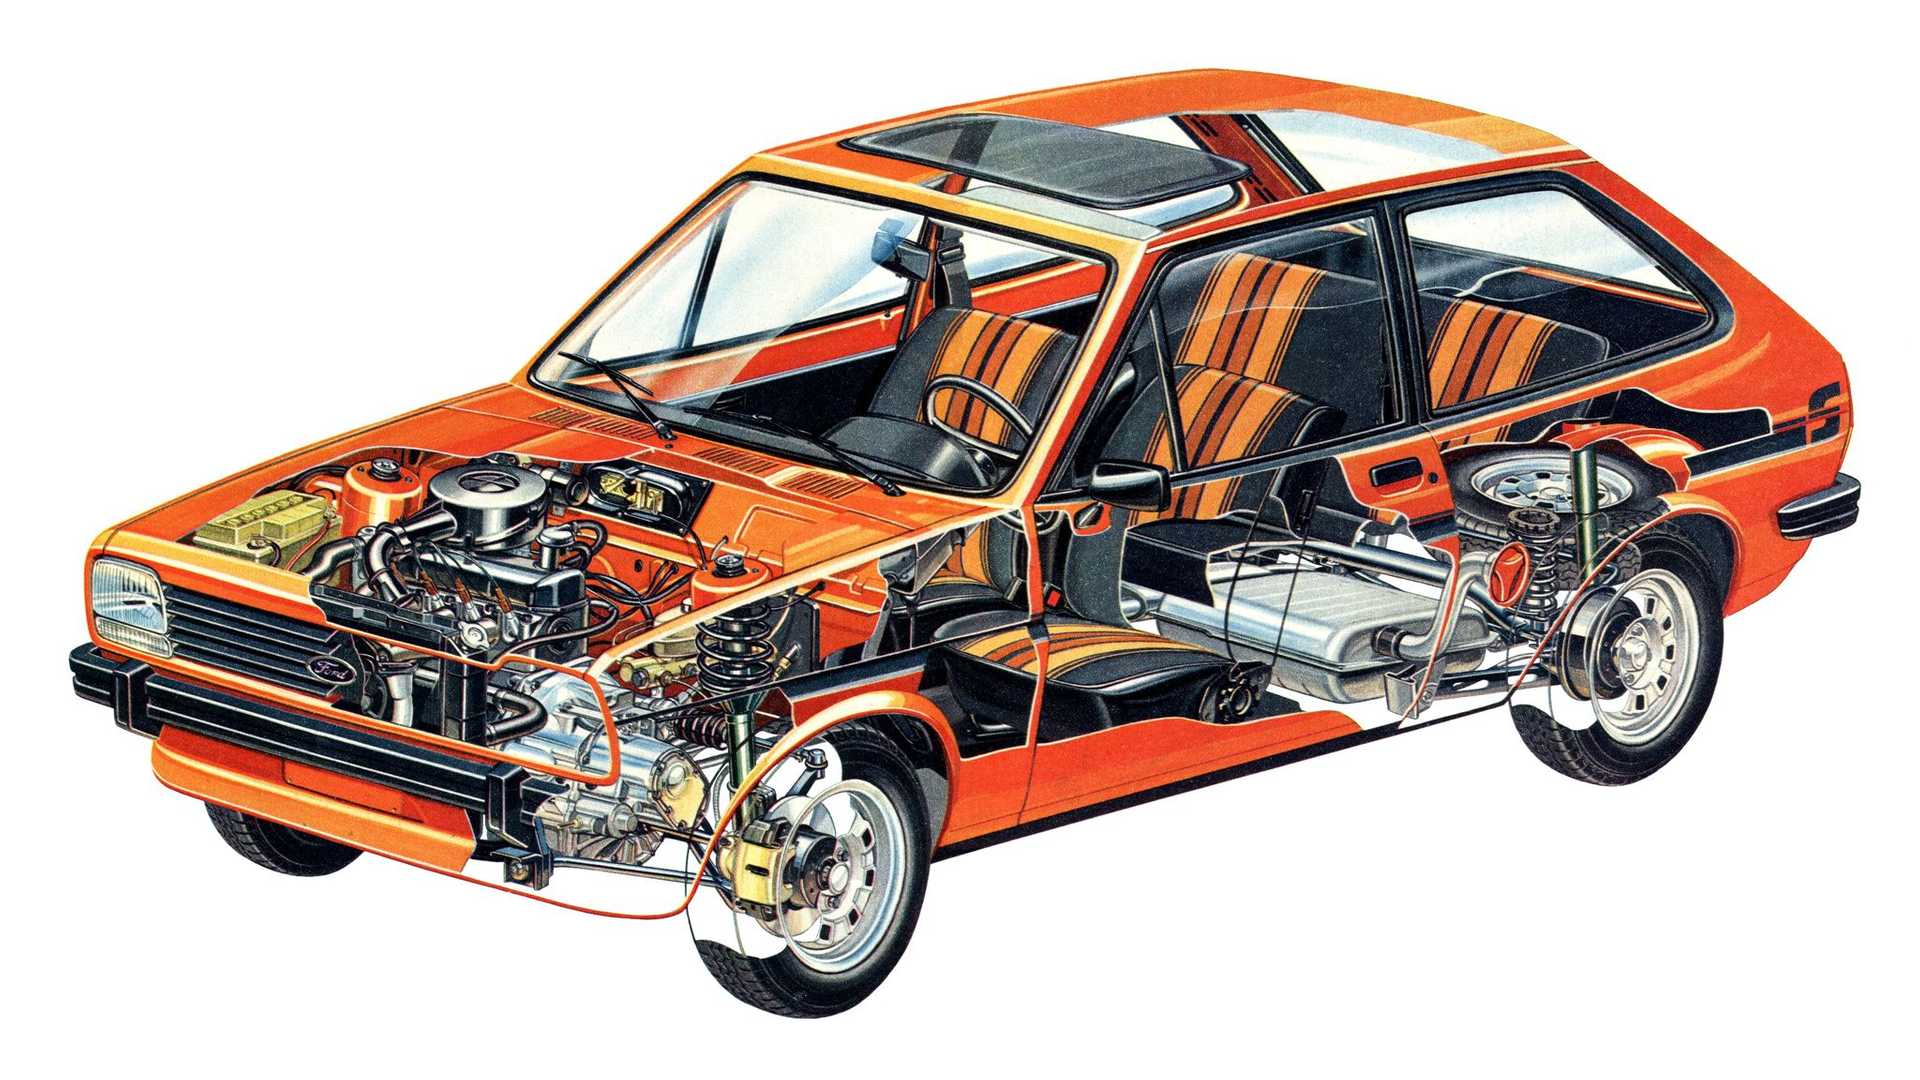 Ford Fiesta 1976